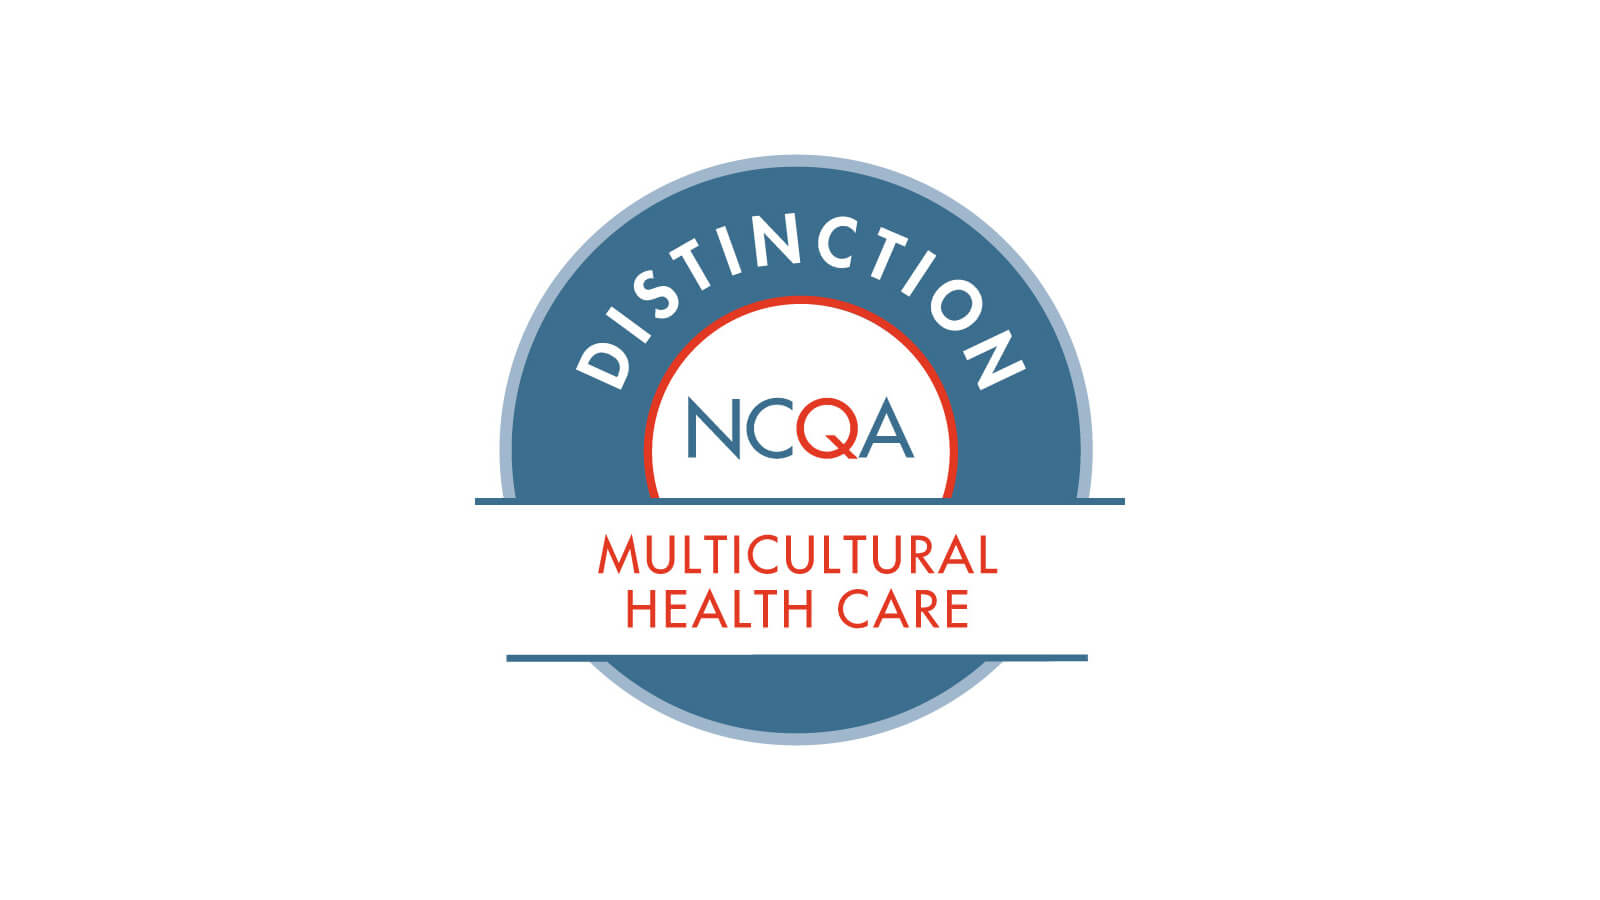 A logo reads: Distinction - NCQA - Multicultural Health Care